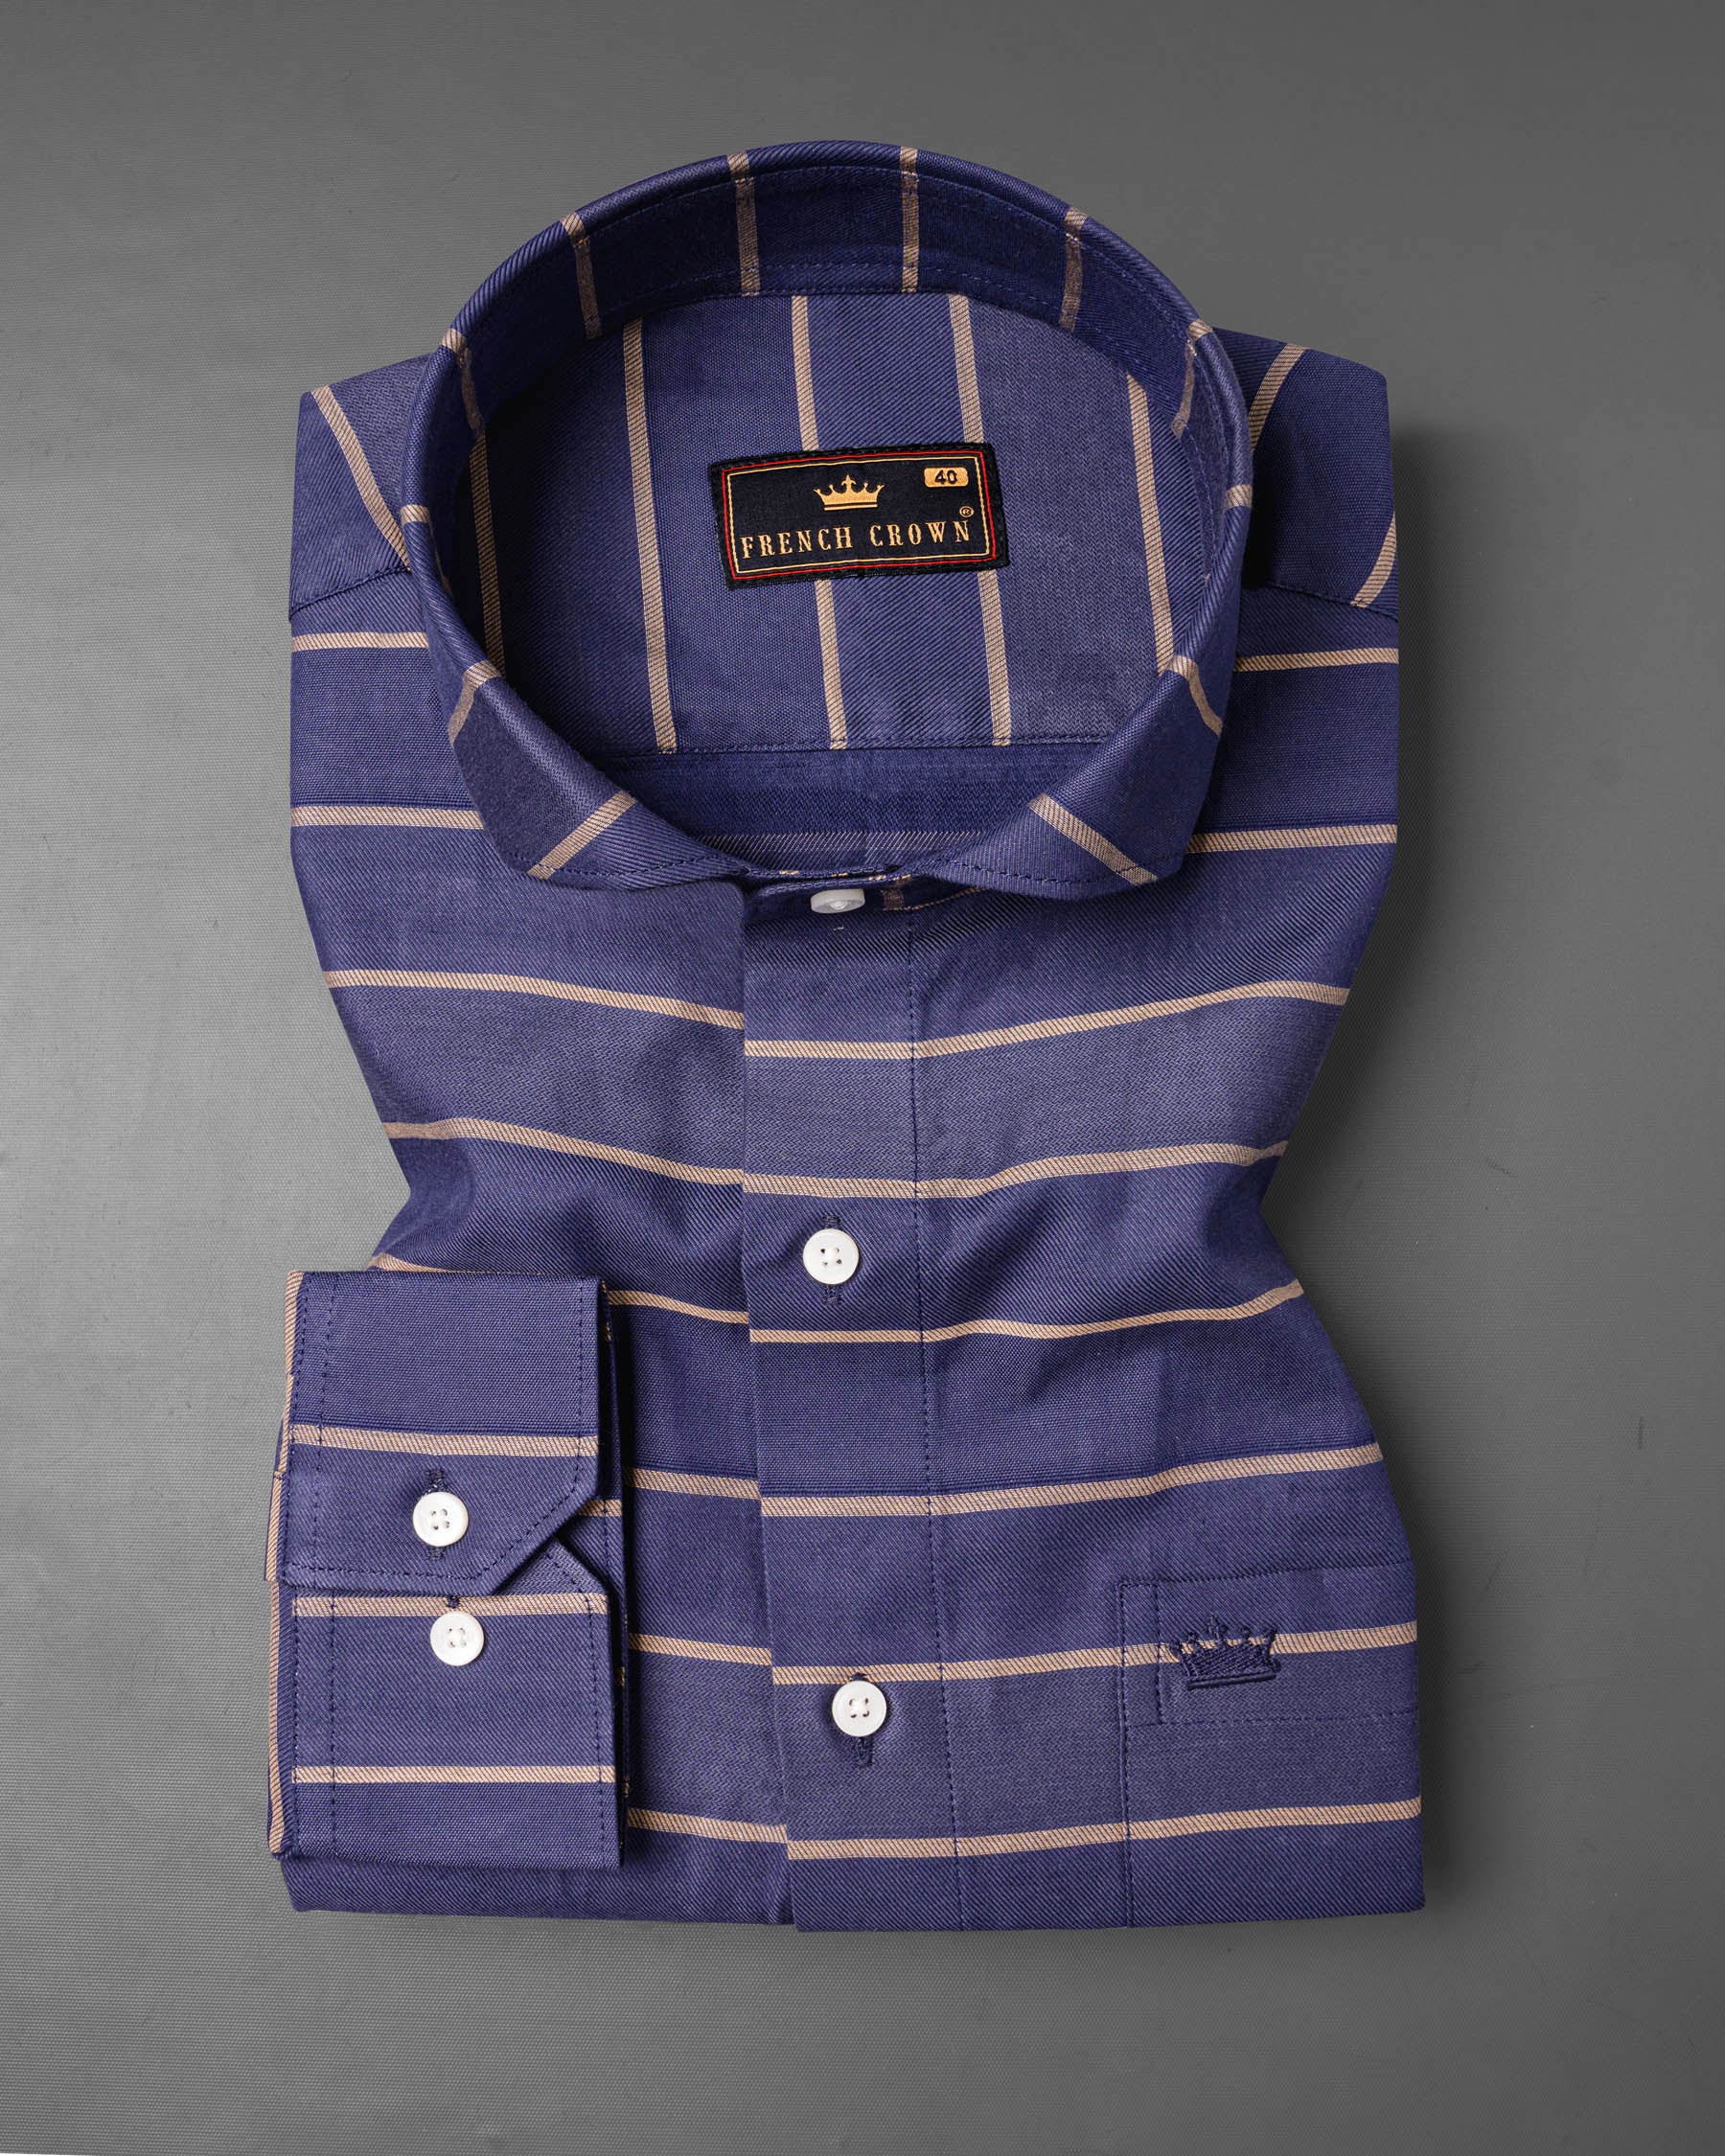 Gun Powder Blue and Pavlova Striped Twill Premium Cotton Shirt